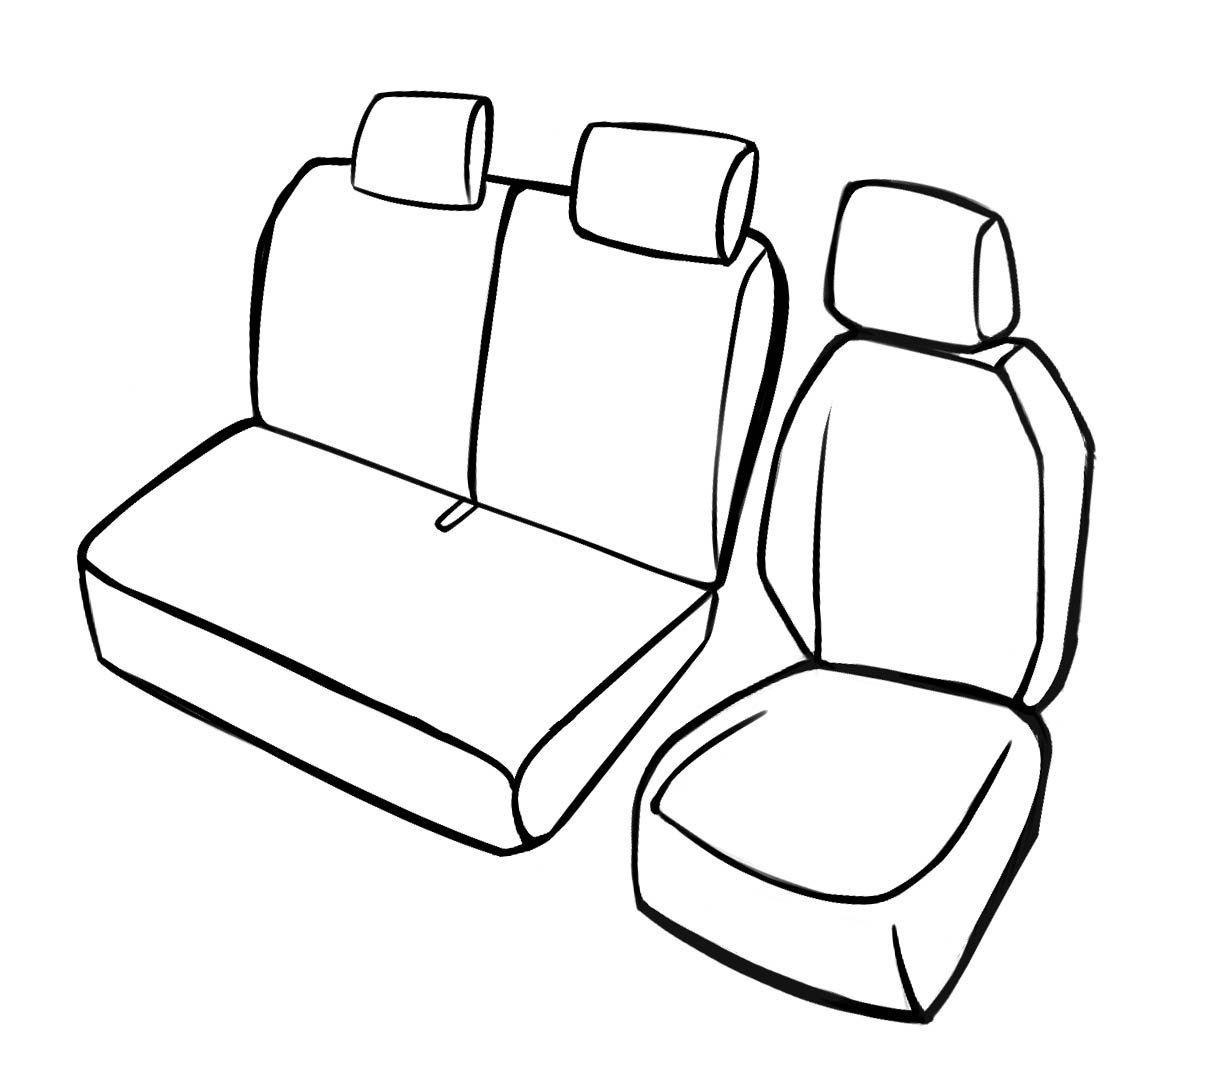 Premium Autostoelbekleding compatibel met Iveco Daily V 2011-02/2014, 1 enkel stoelbekleding front, 1 Dubbele bankhoes